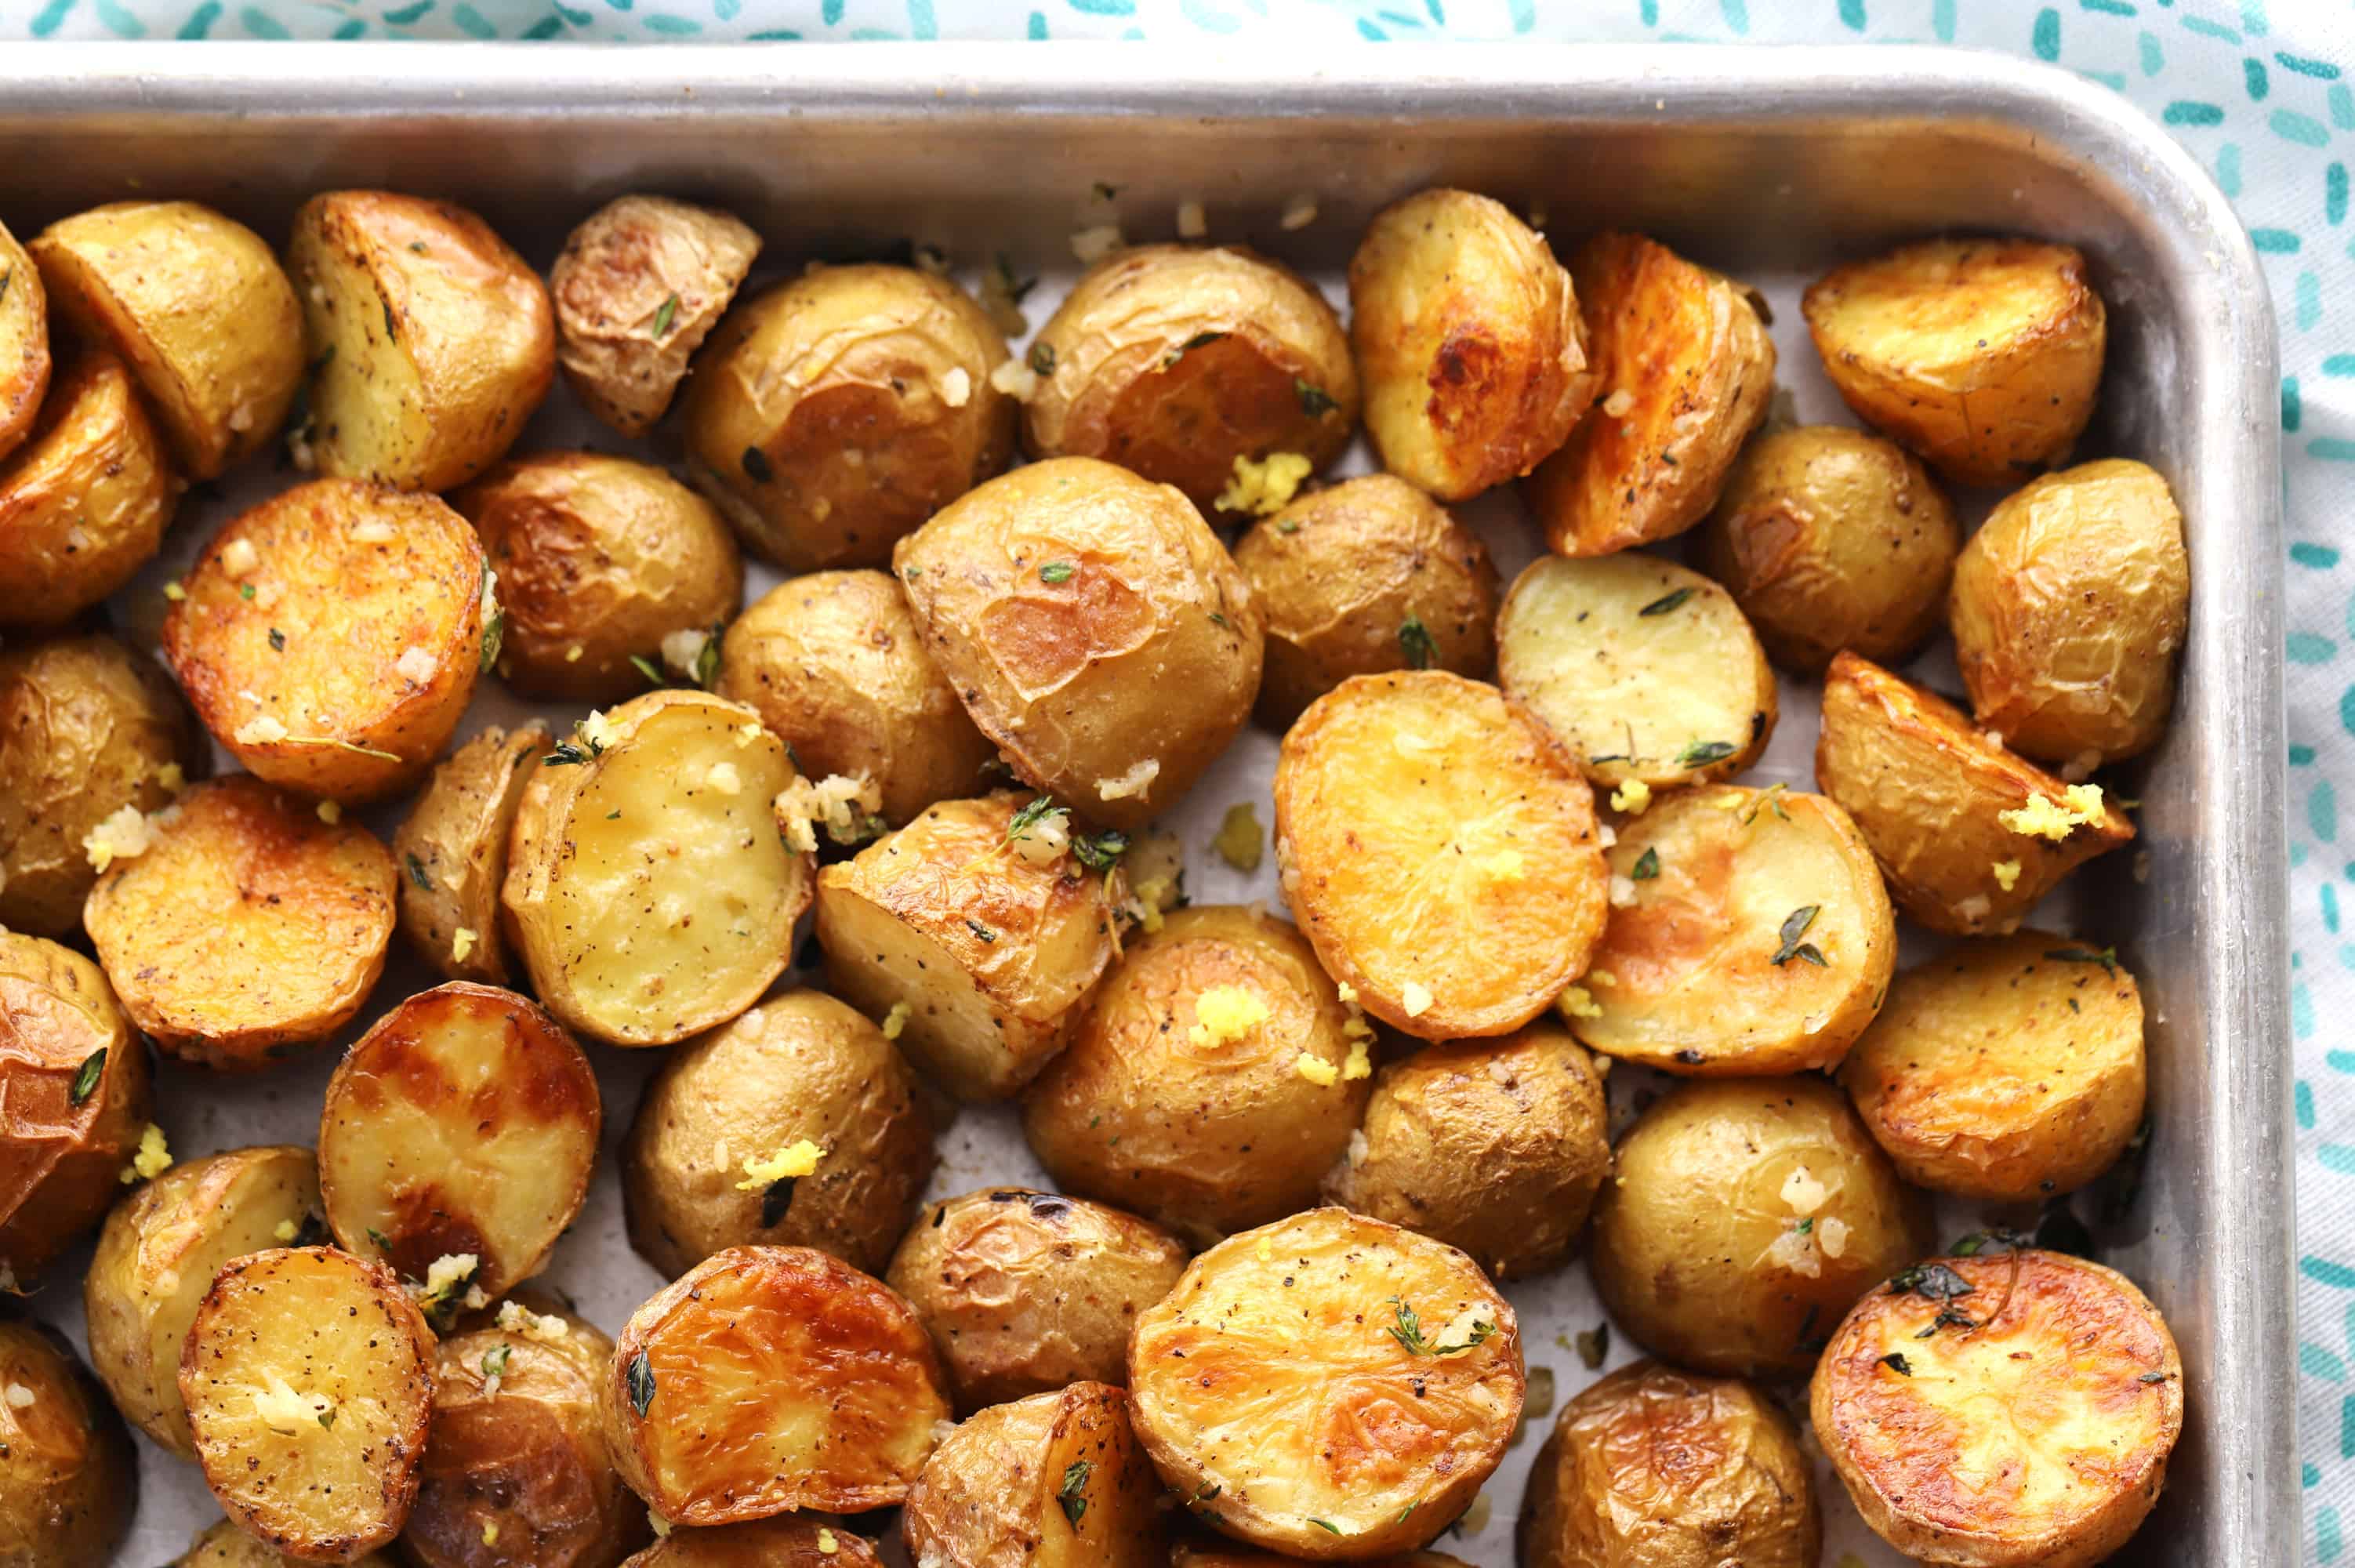 Oven Roasted Potatoes on a baking sheet. roasted potatoes in oven, oven baked roasted potatoes, small gold potatoes. baked gold potatoes.